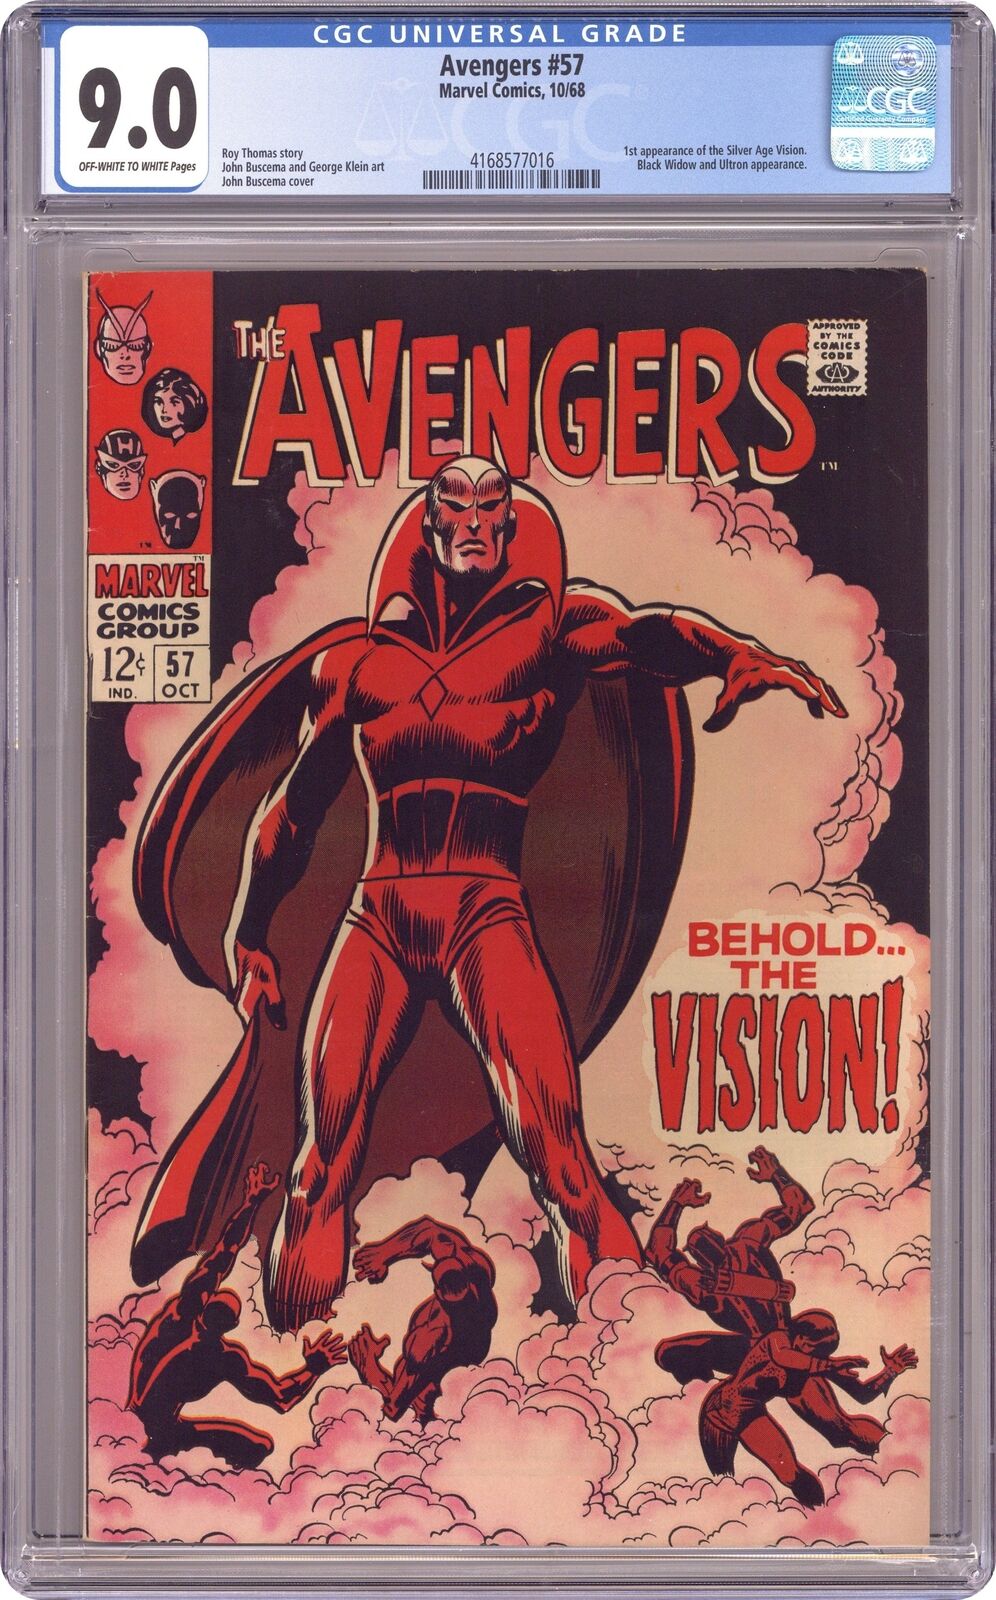 Avengers #57 CGC 9.0 1968 4168577016 1st SA app. Vision